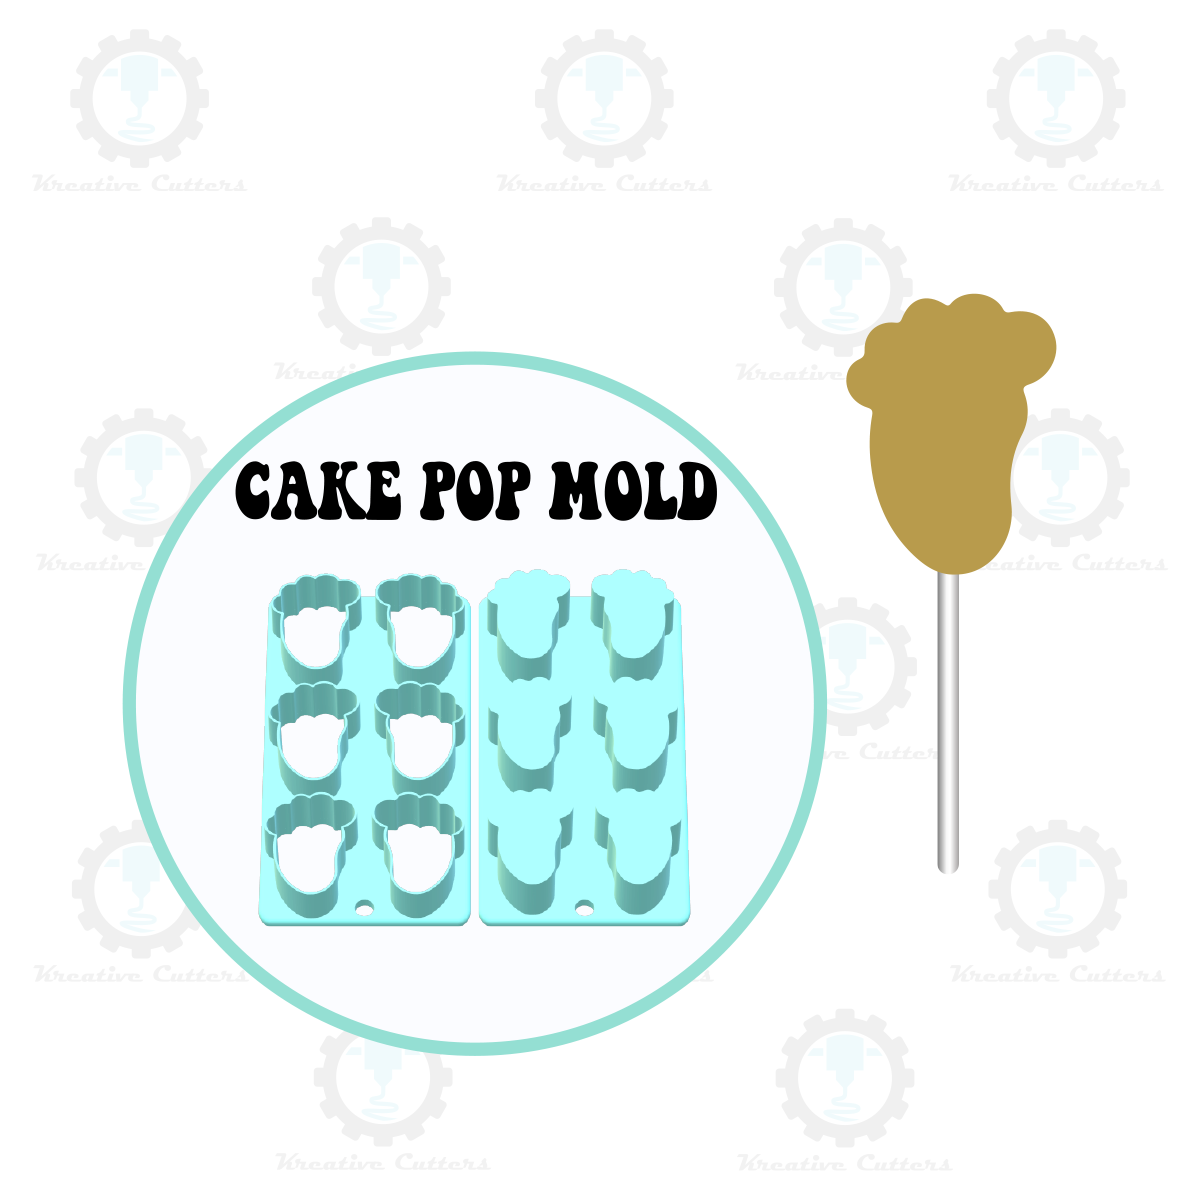 Baby Feet Cake Pop Mold | Single or Multi-popper